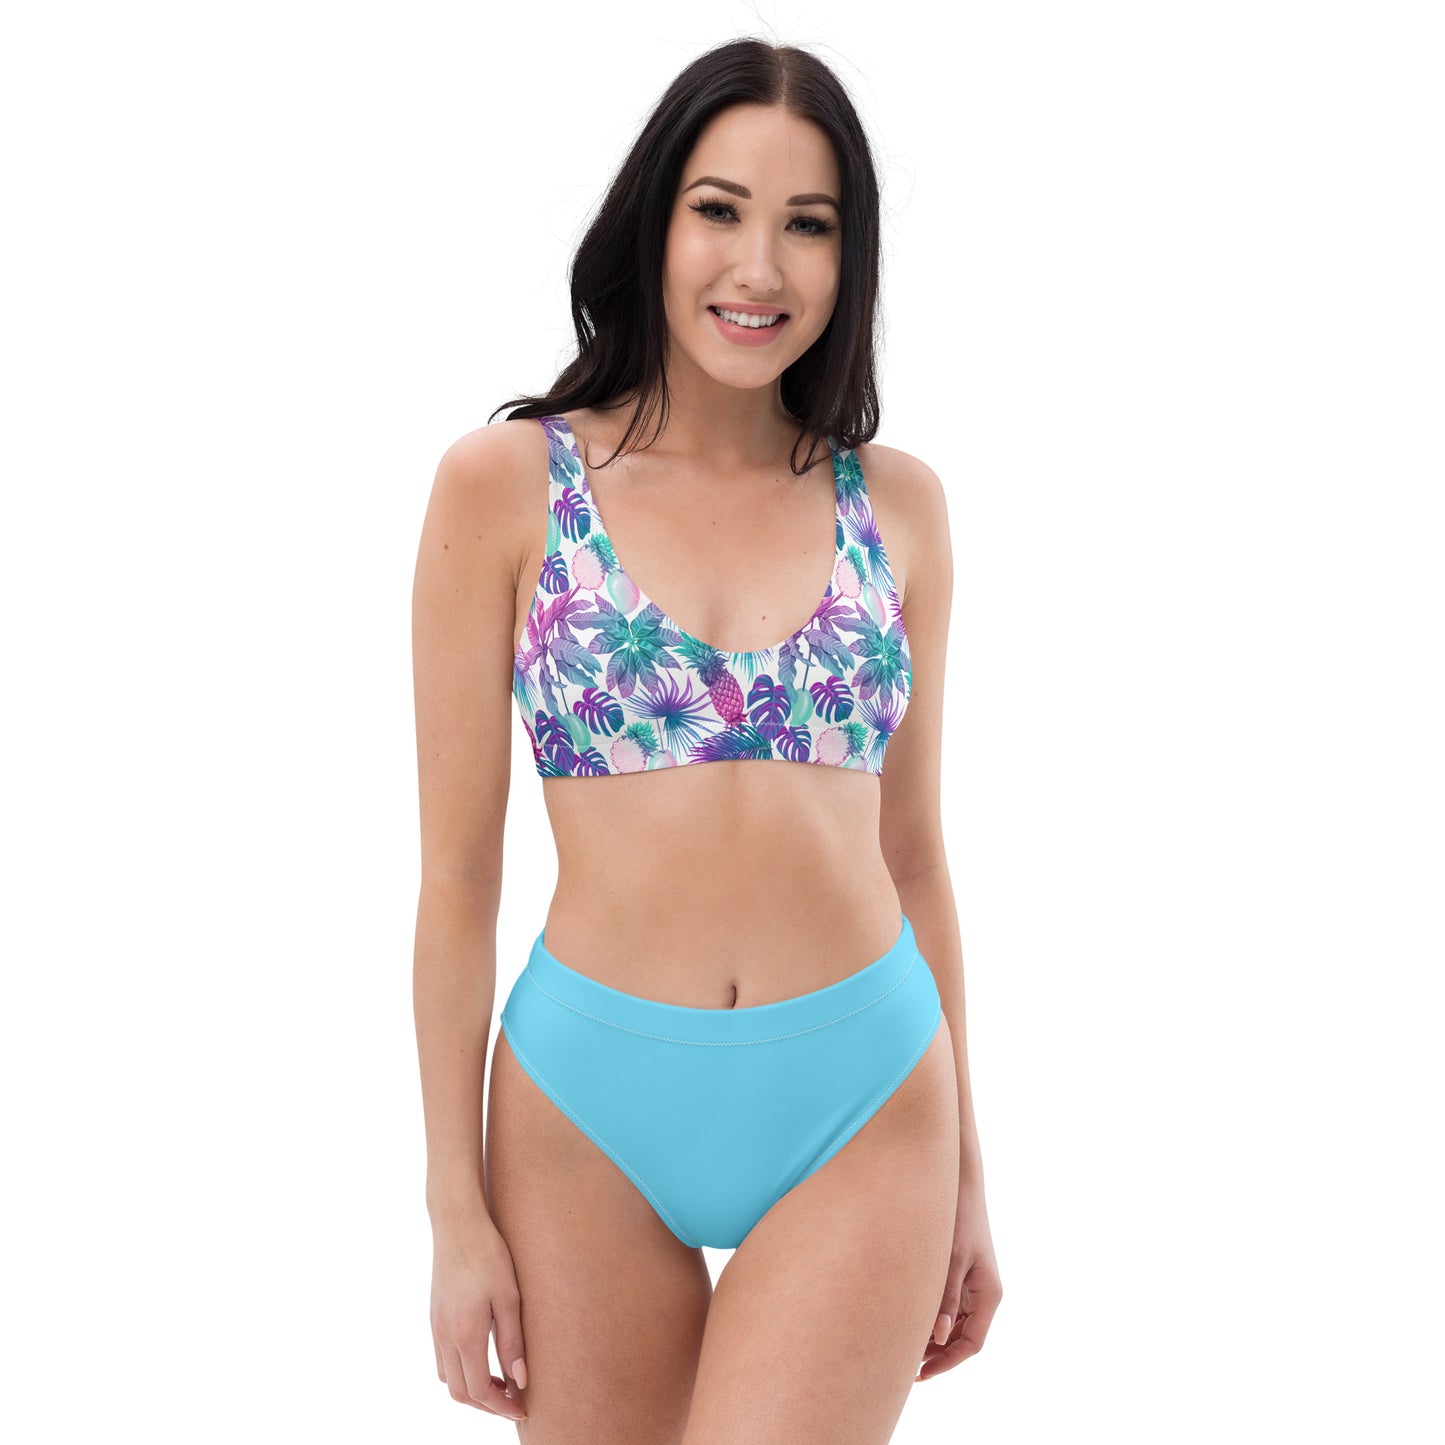 Neon Flower and Caribbean Blue high-waisted bikini